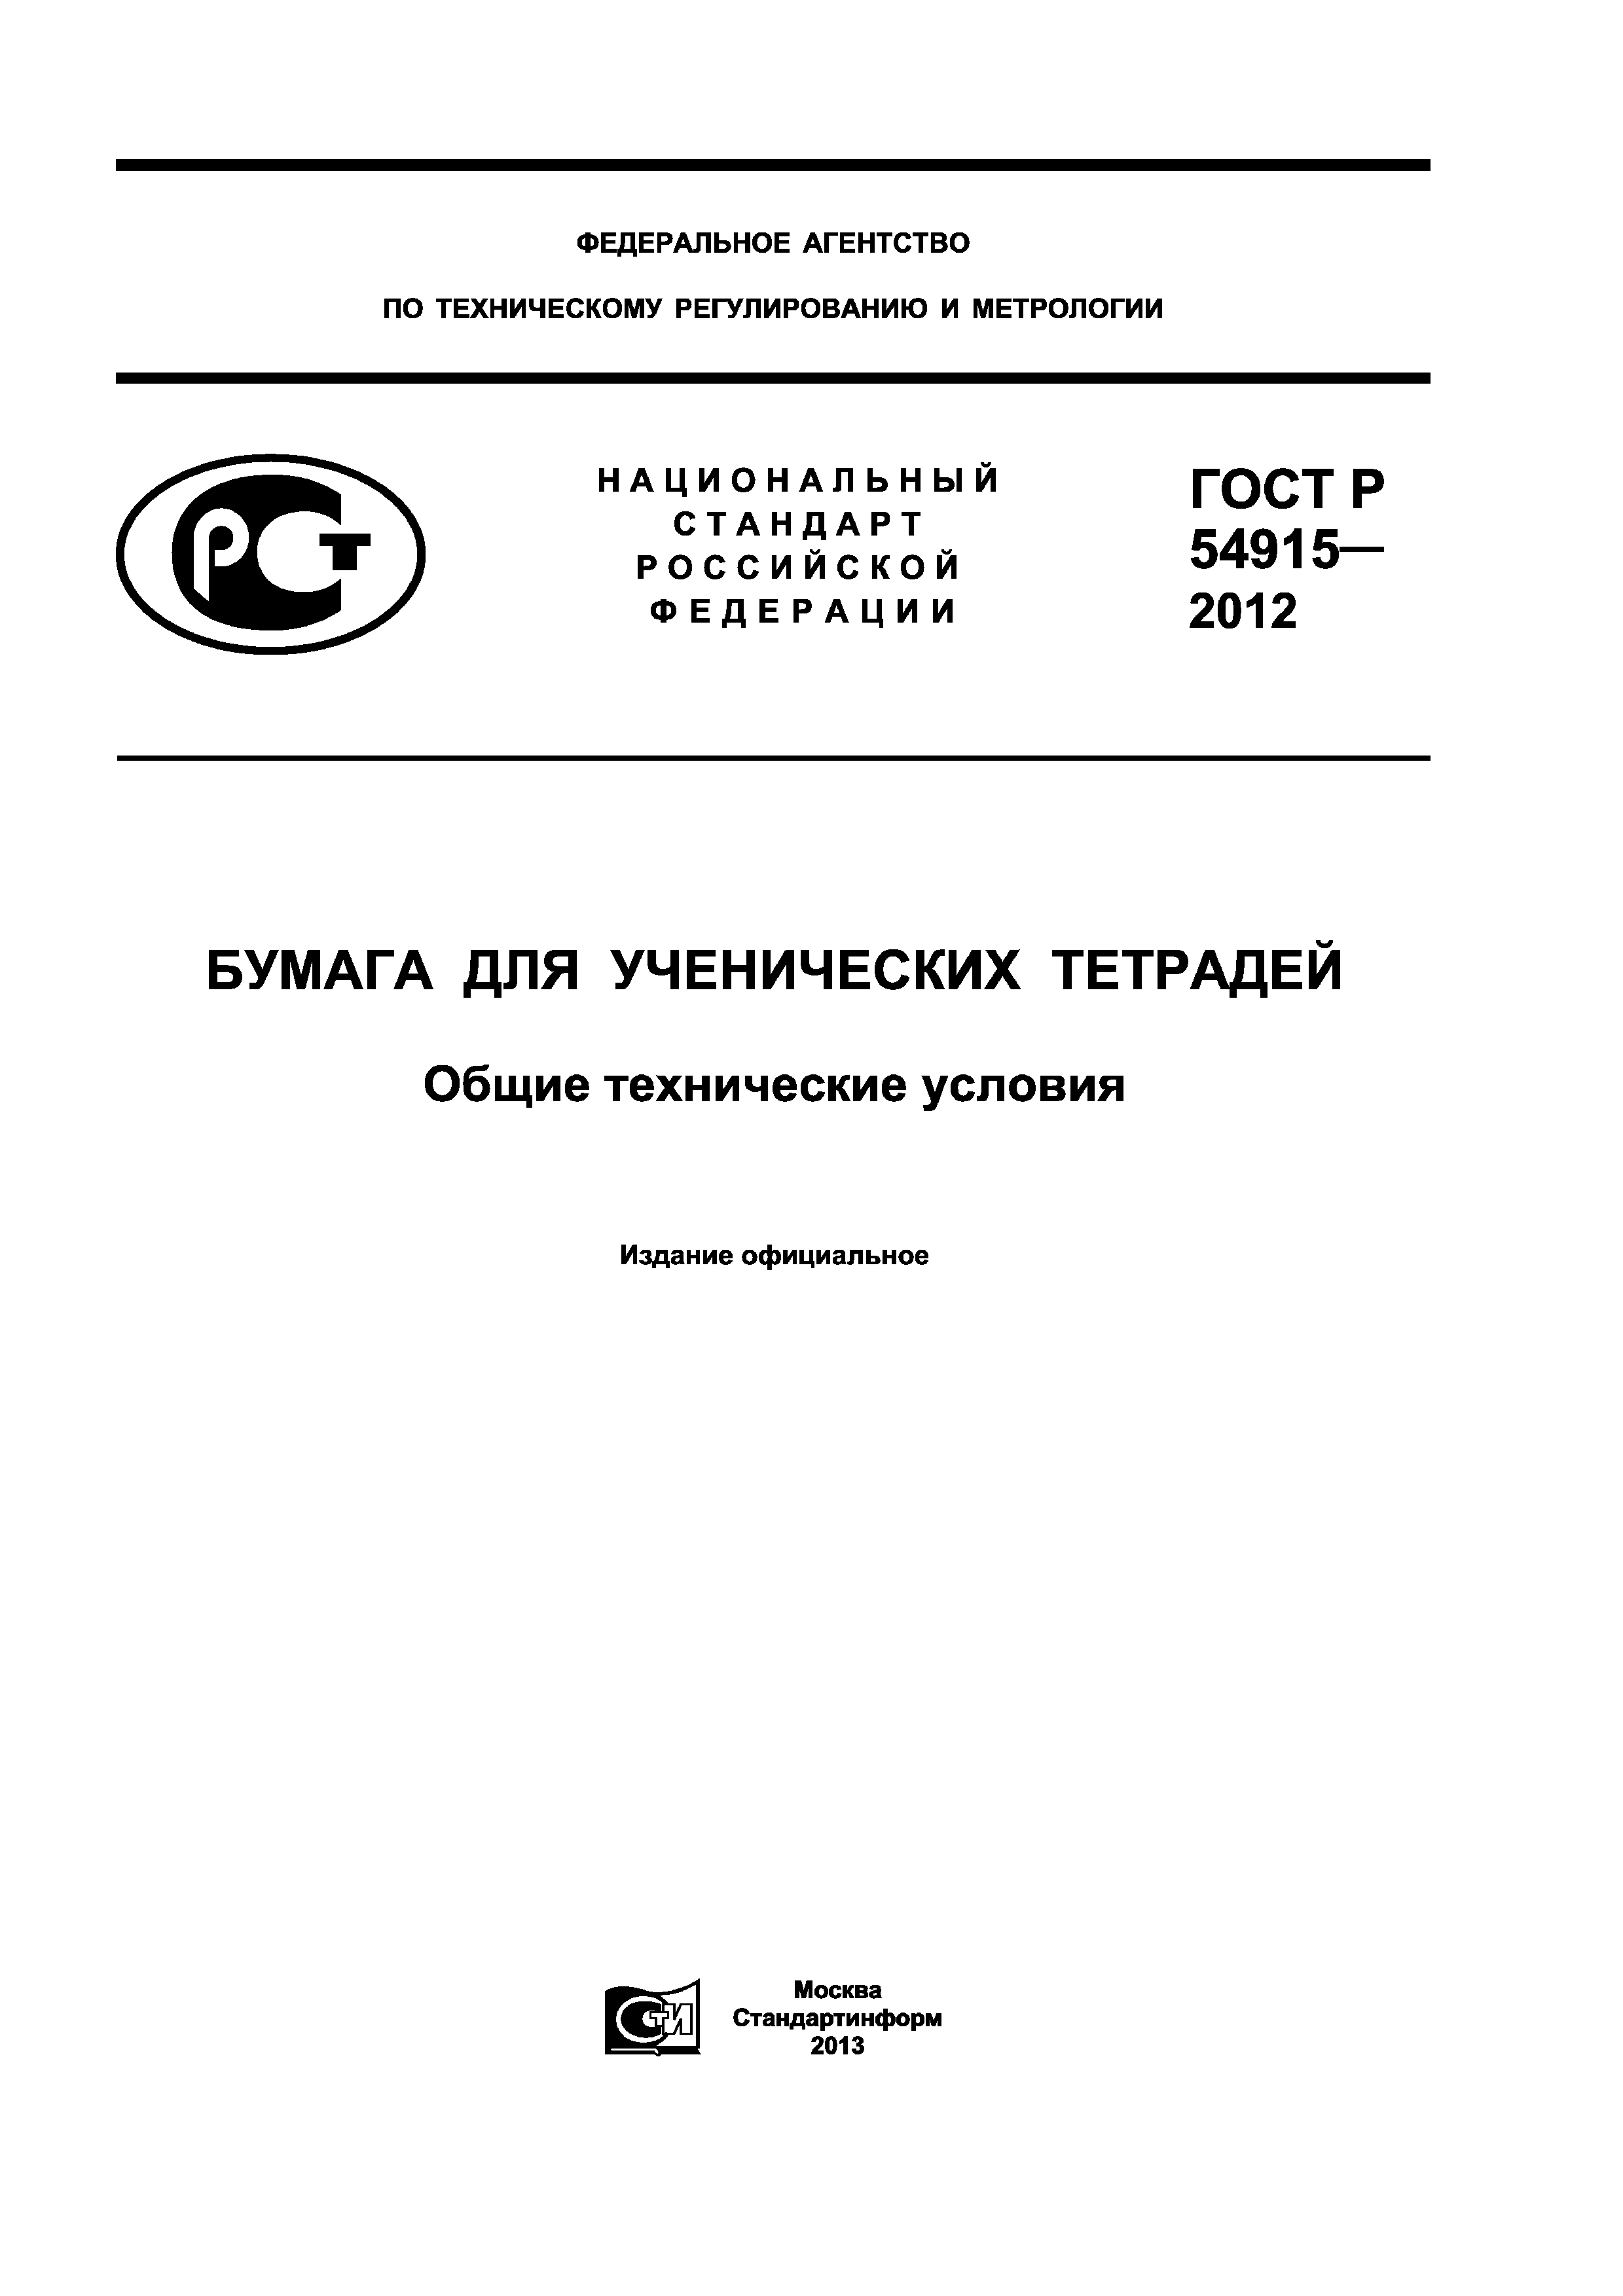 ГОСТ Р 54915-2012